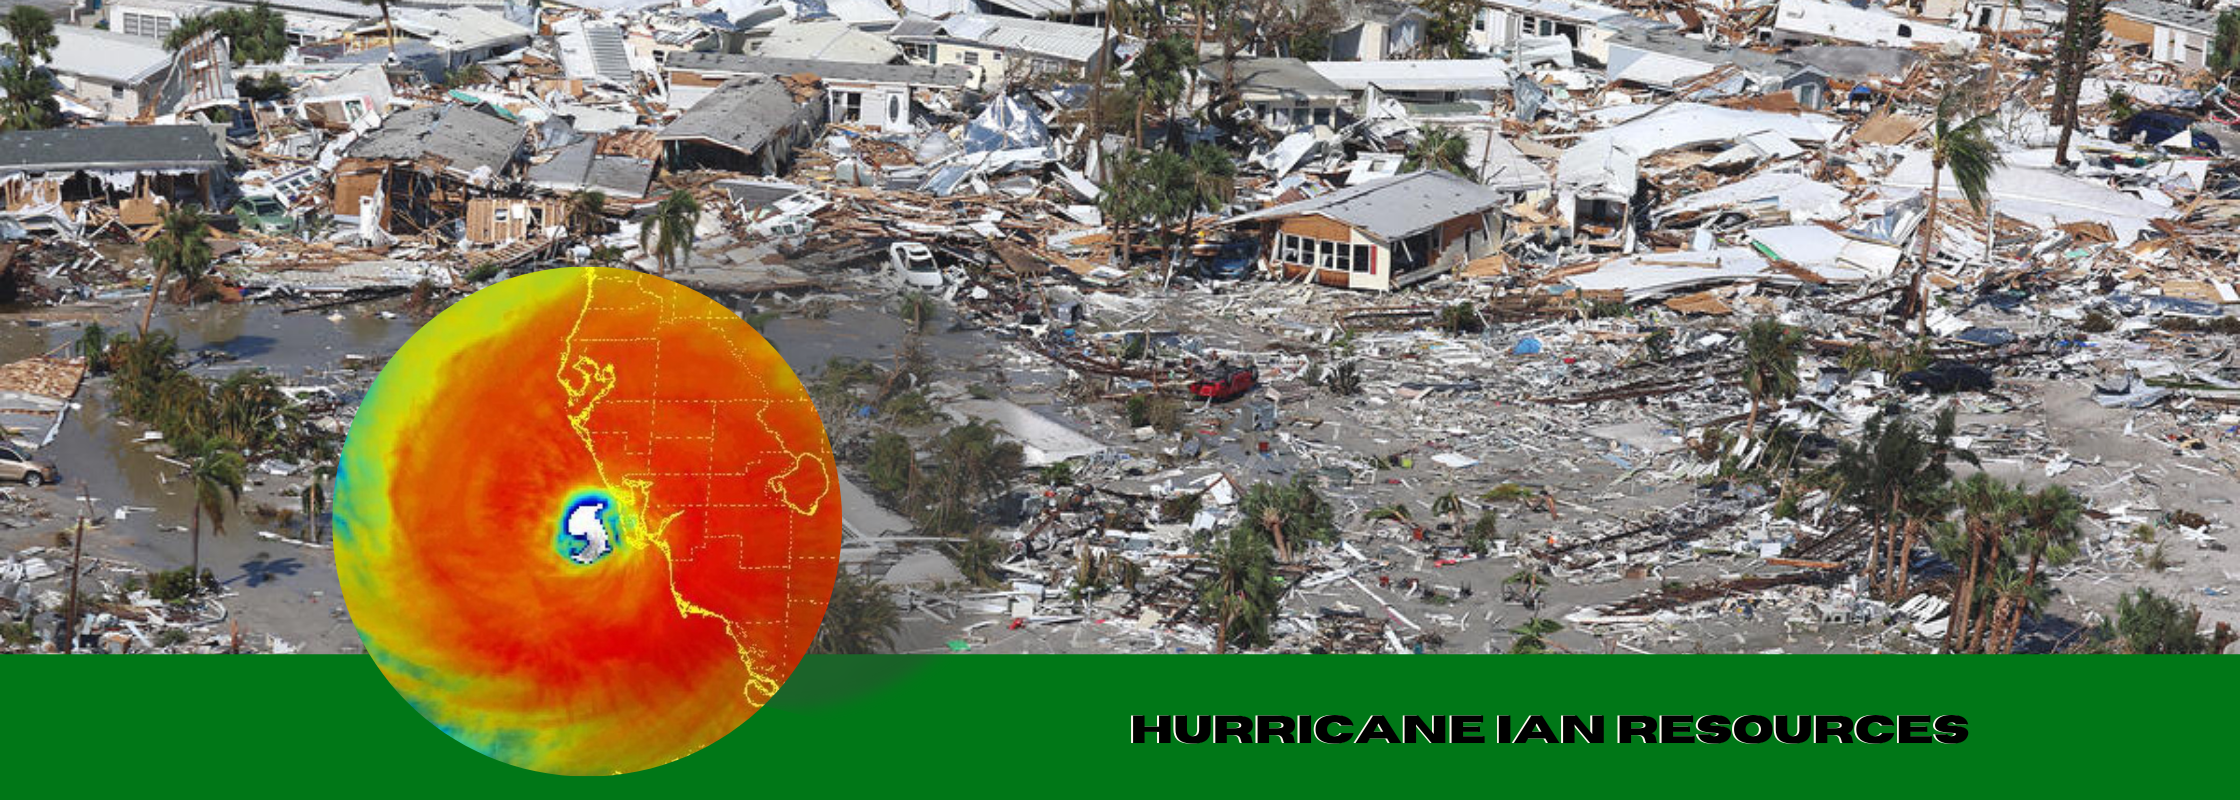 Hurricane Ian Resource Header Image